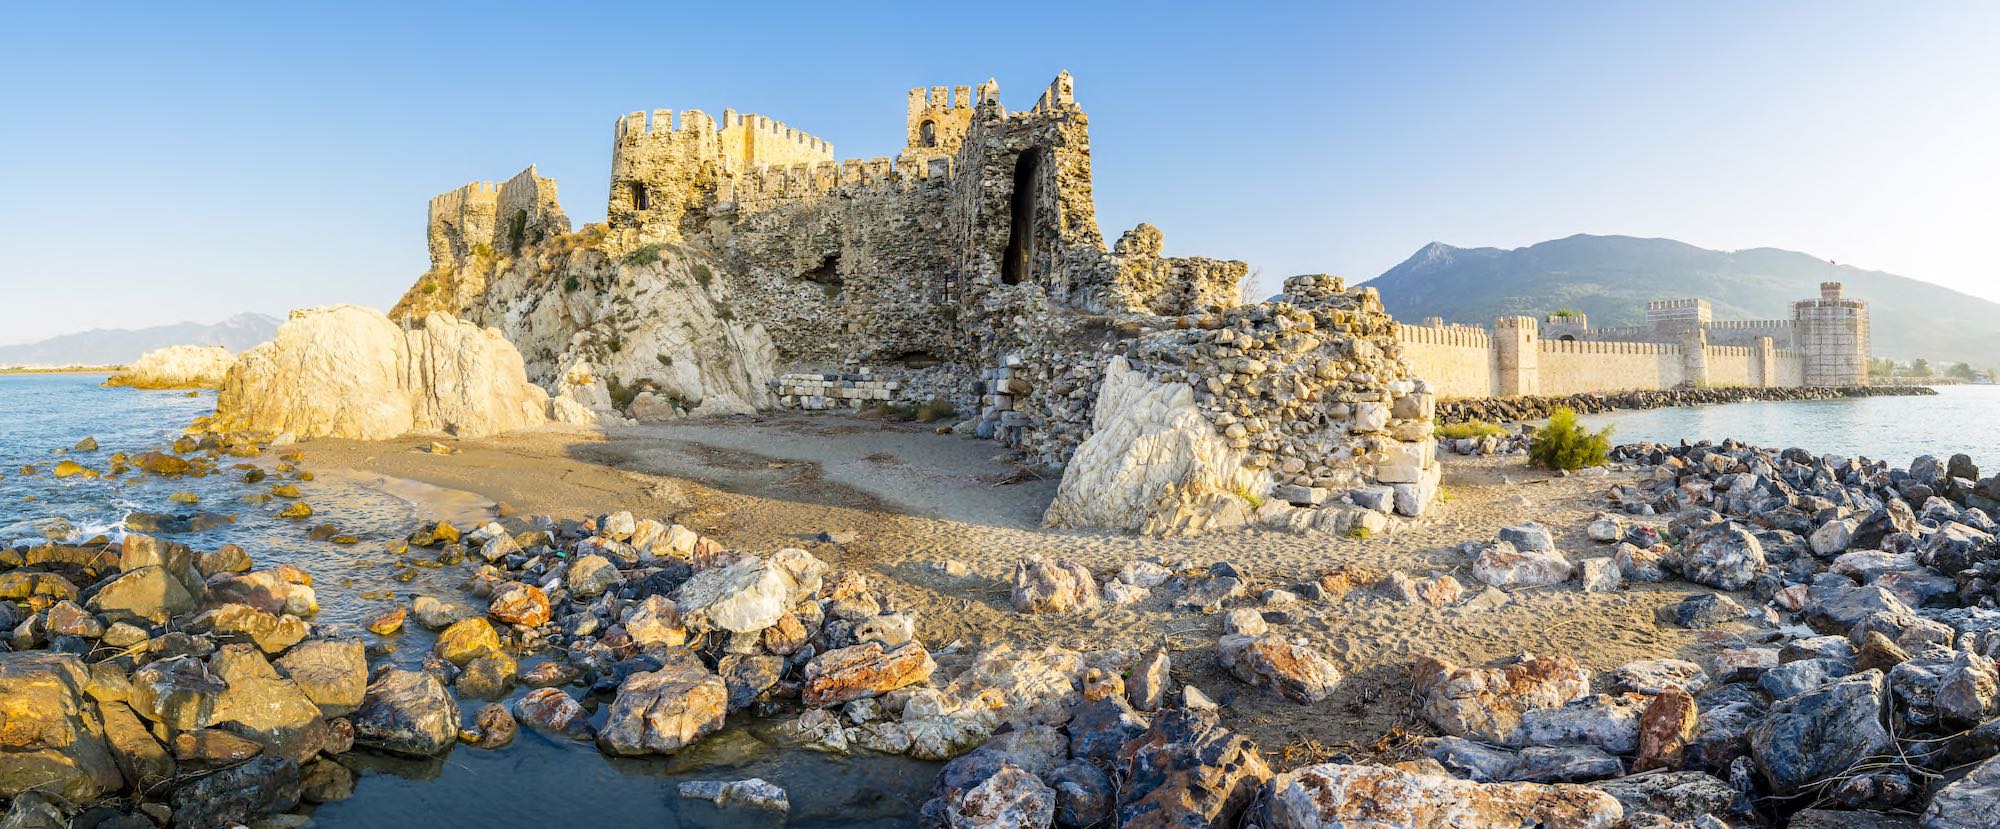 Mamure Castle in Anamur Town nahe Alanya Copyright © AdobeStock 433197164 nejdetduzen